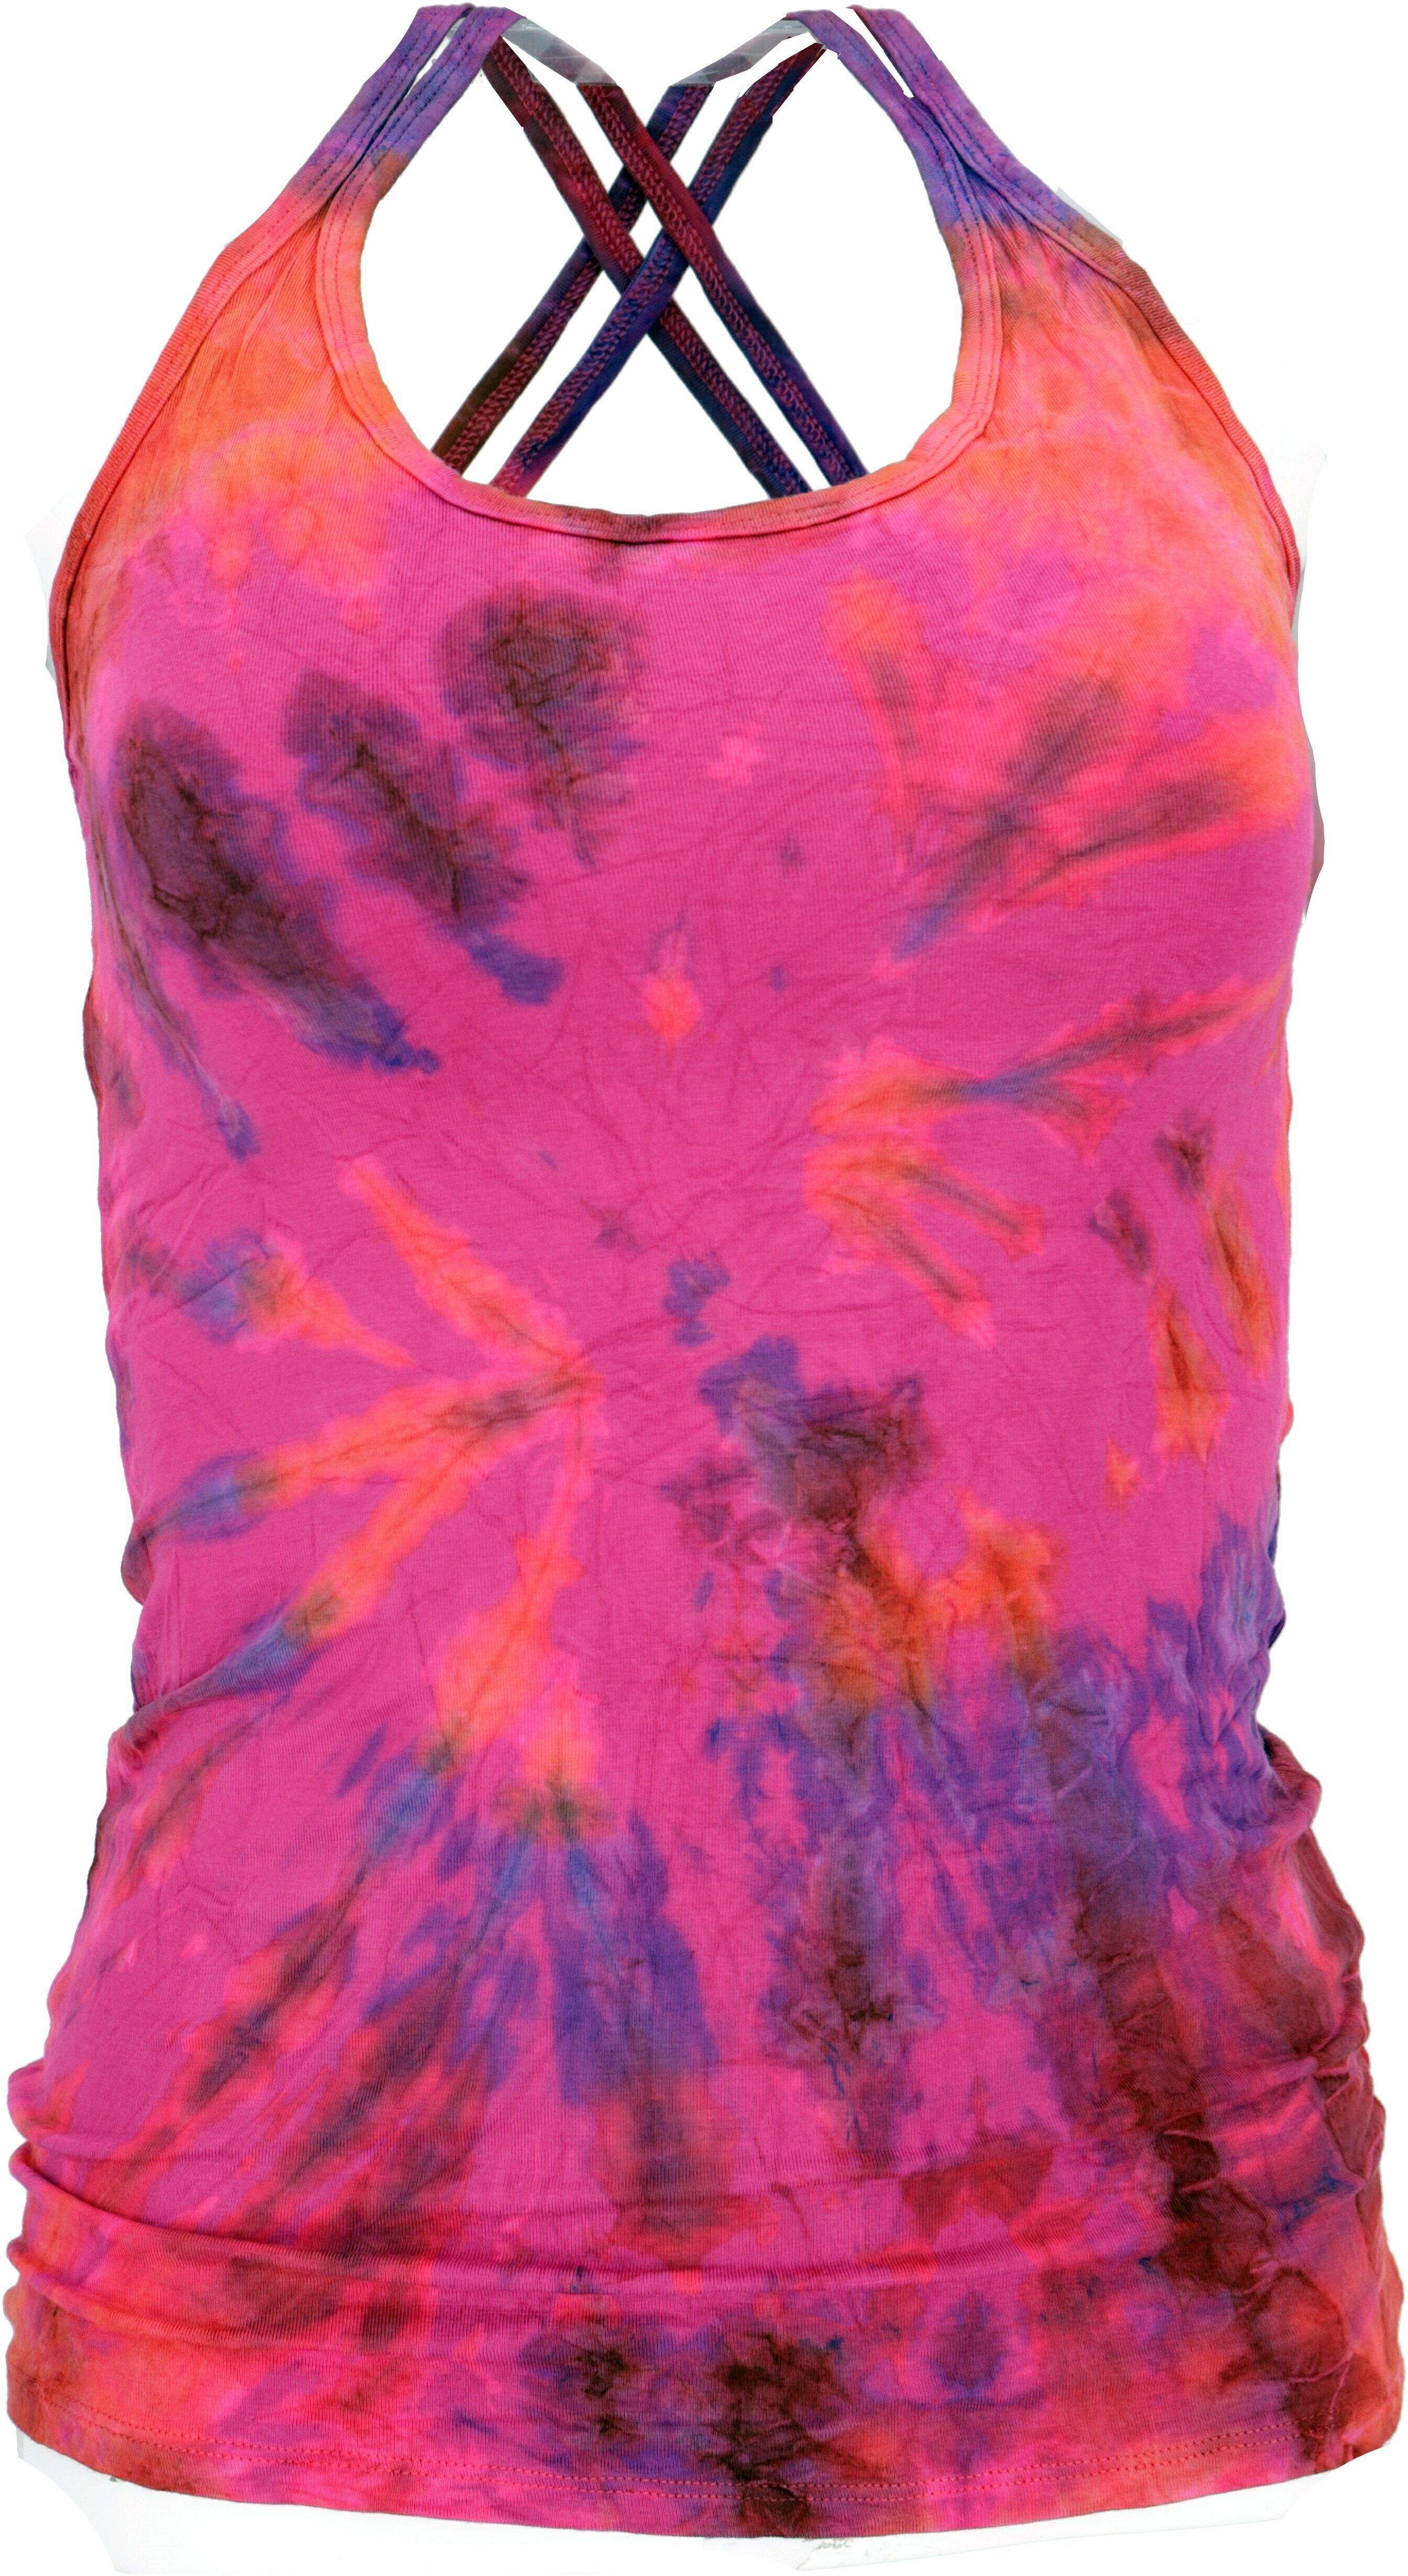 Guru-Shop T-Shirt Sommerliches Batik Yoga Top, Unikat Tie Dye Top.. Festival, Ethno Style, Hippie, alternative Bekleidung pink